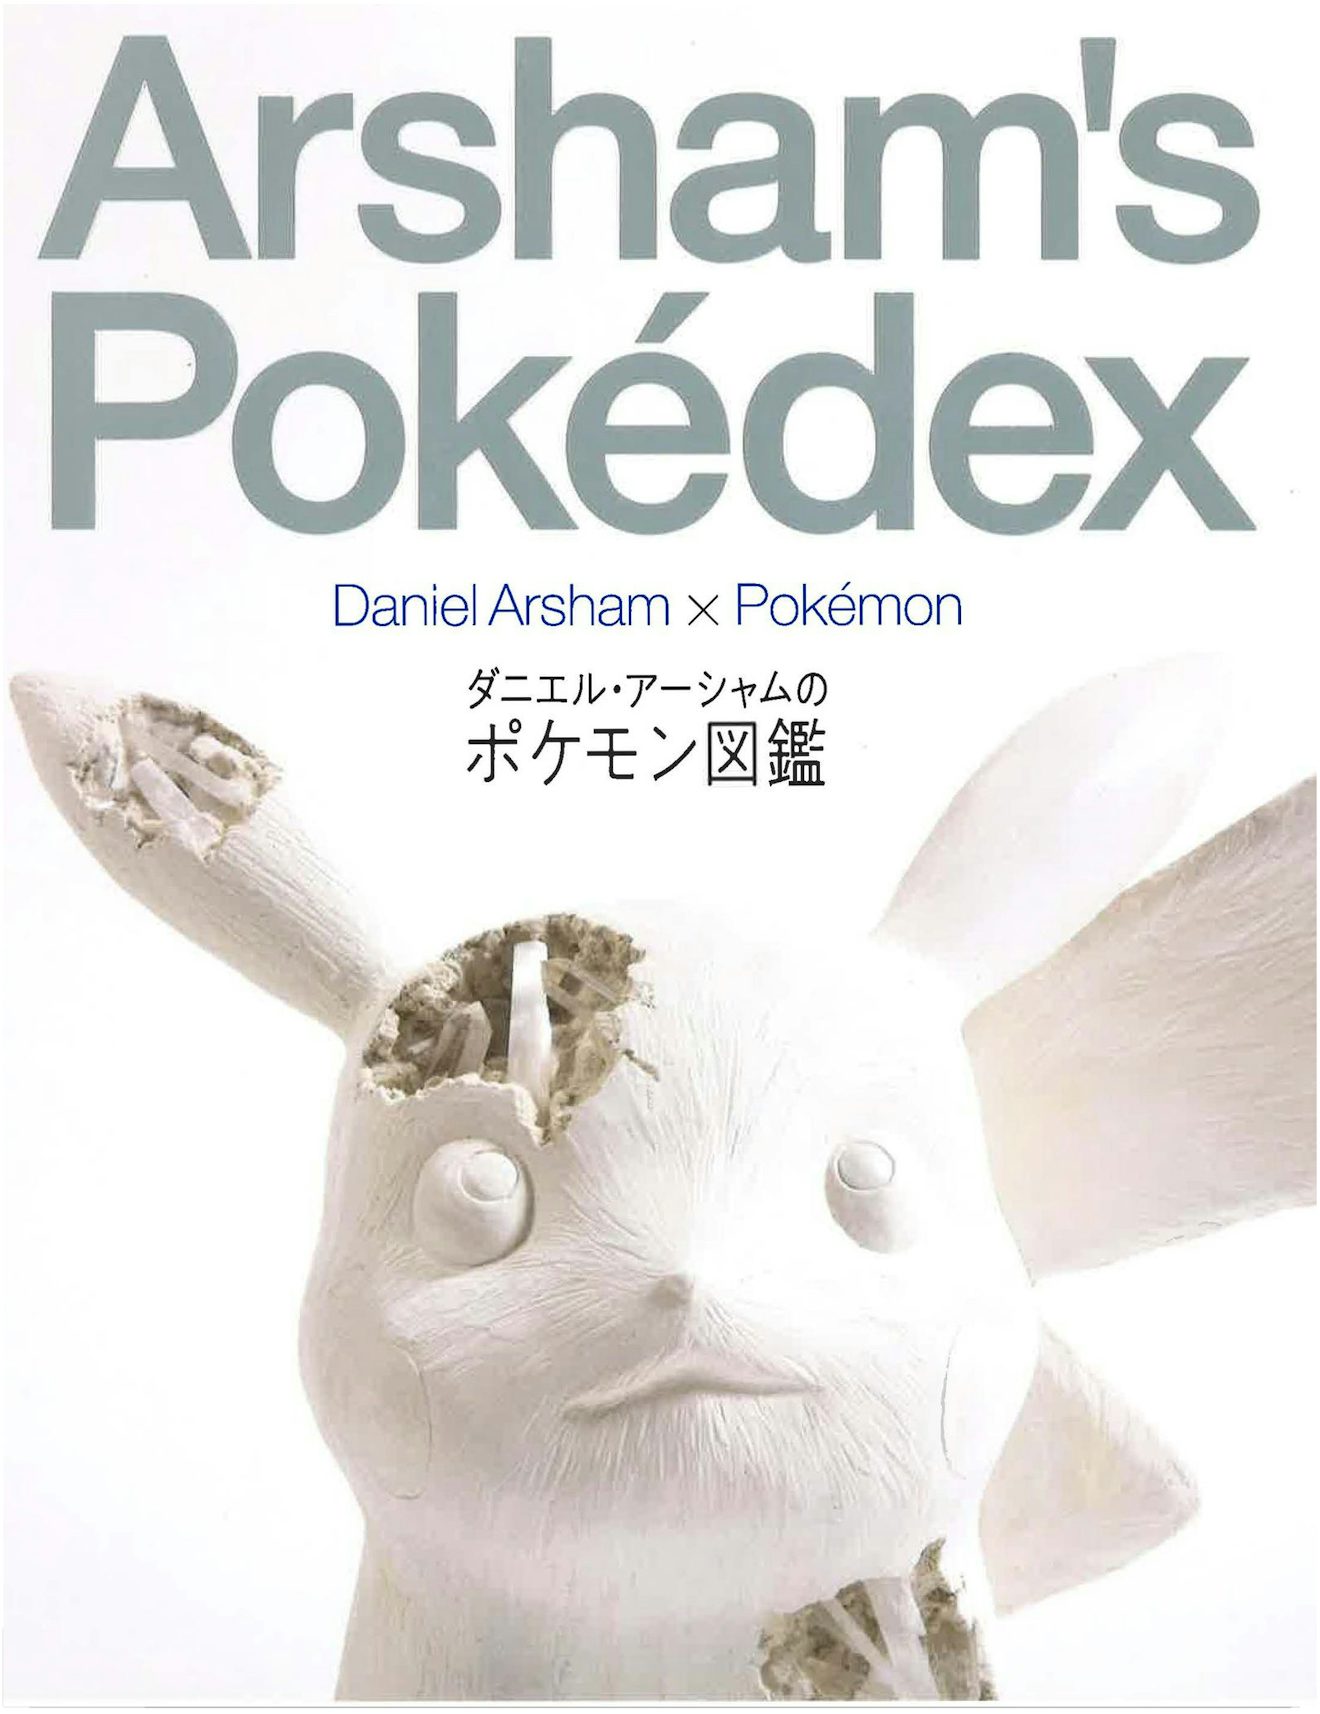 Daniel Arsham - Daniel Arsham x Pokémon: Arsham's Pokédex – Perrotin New  York